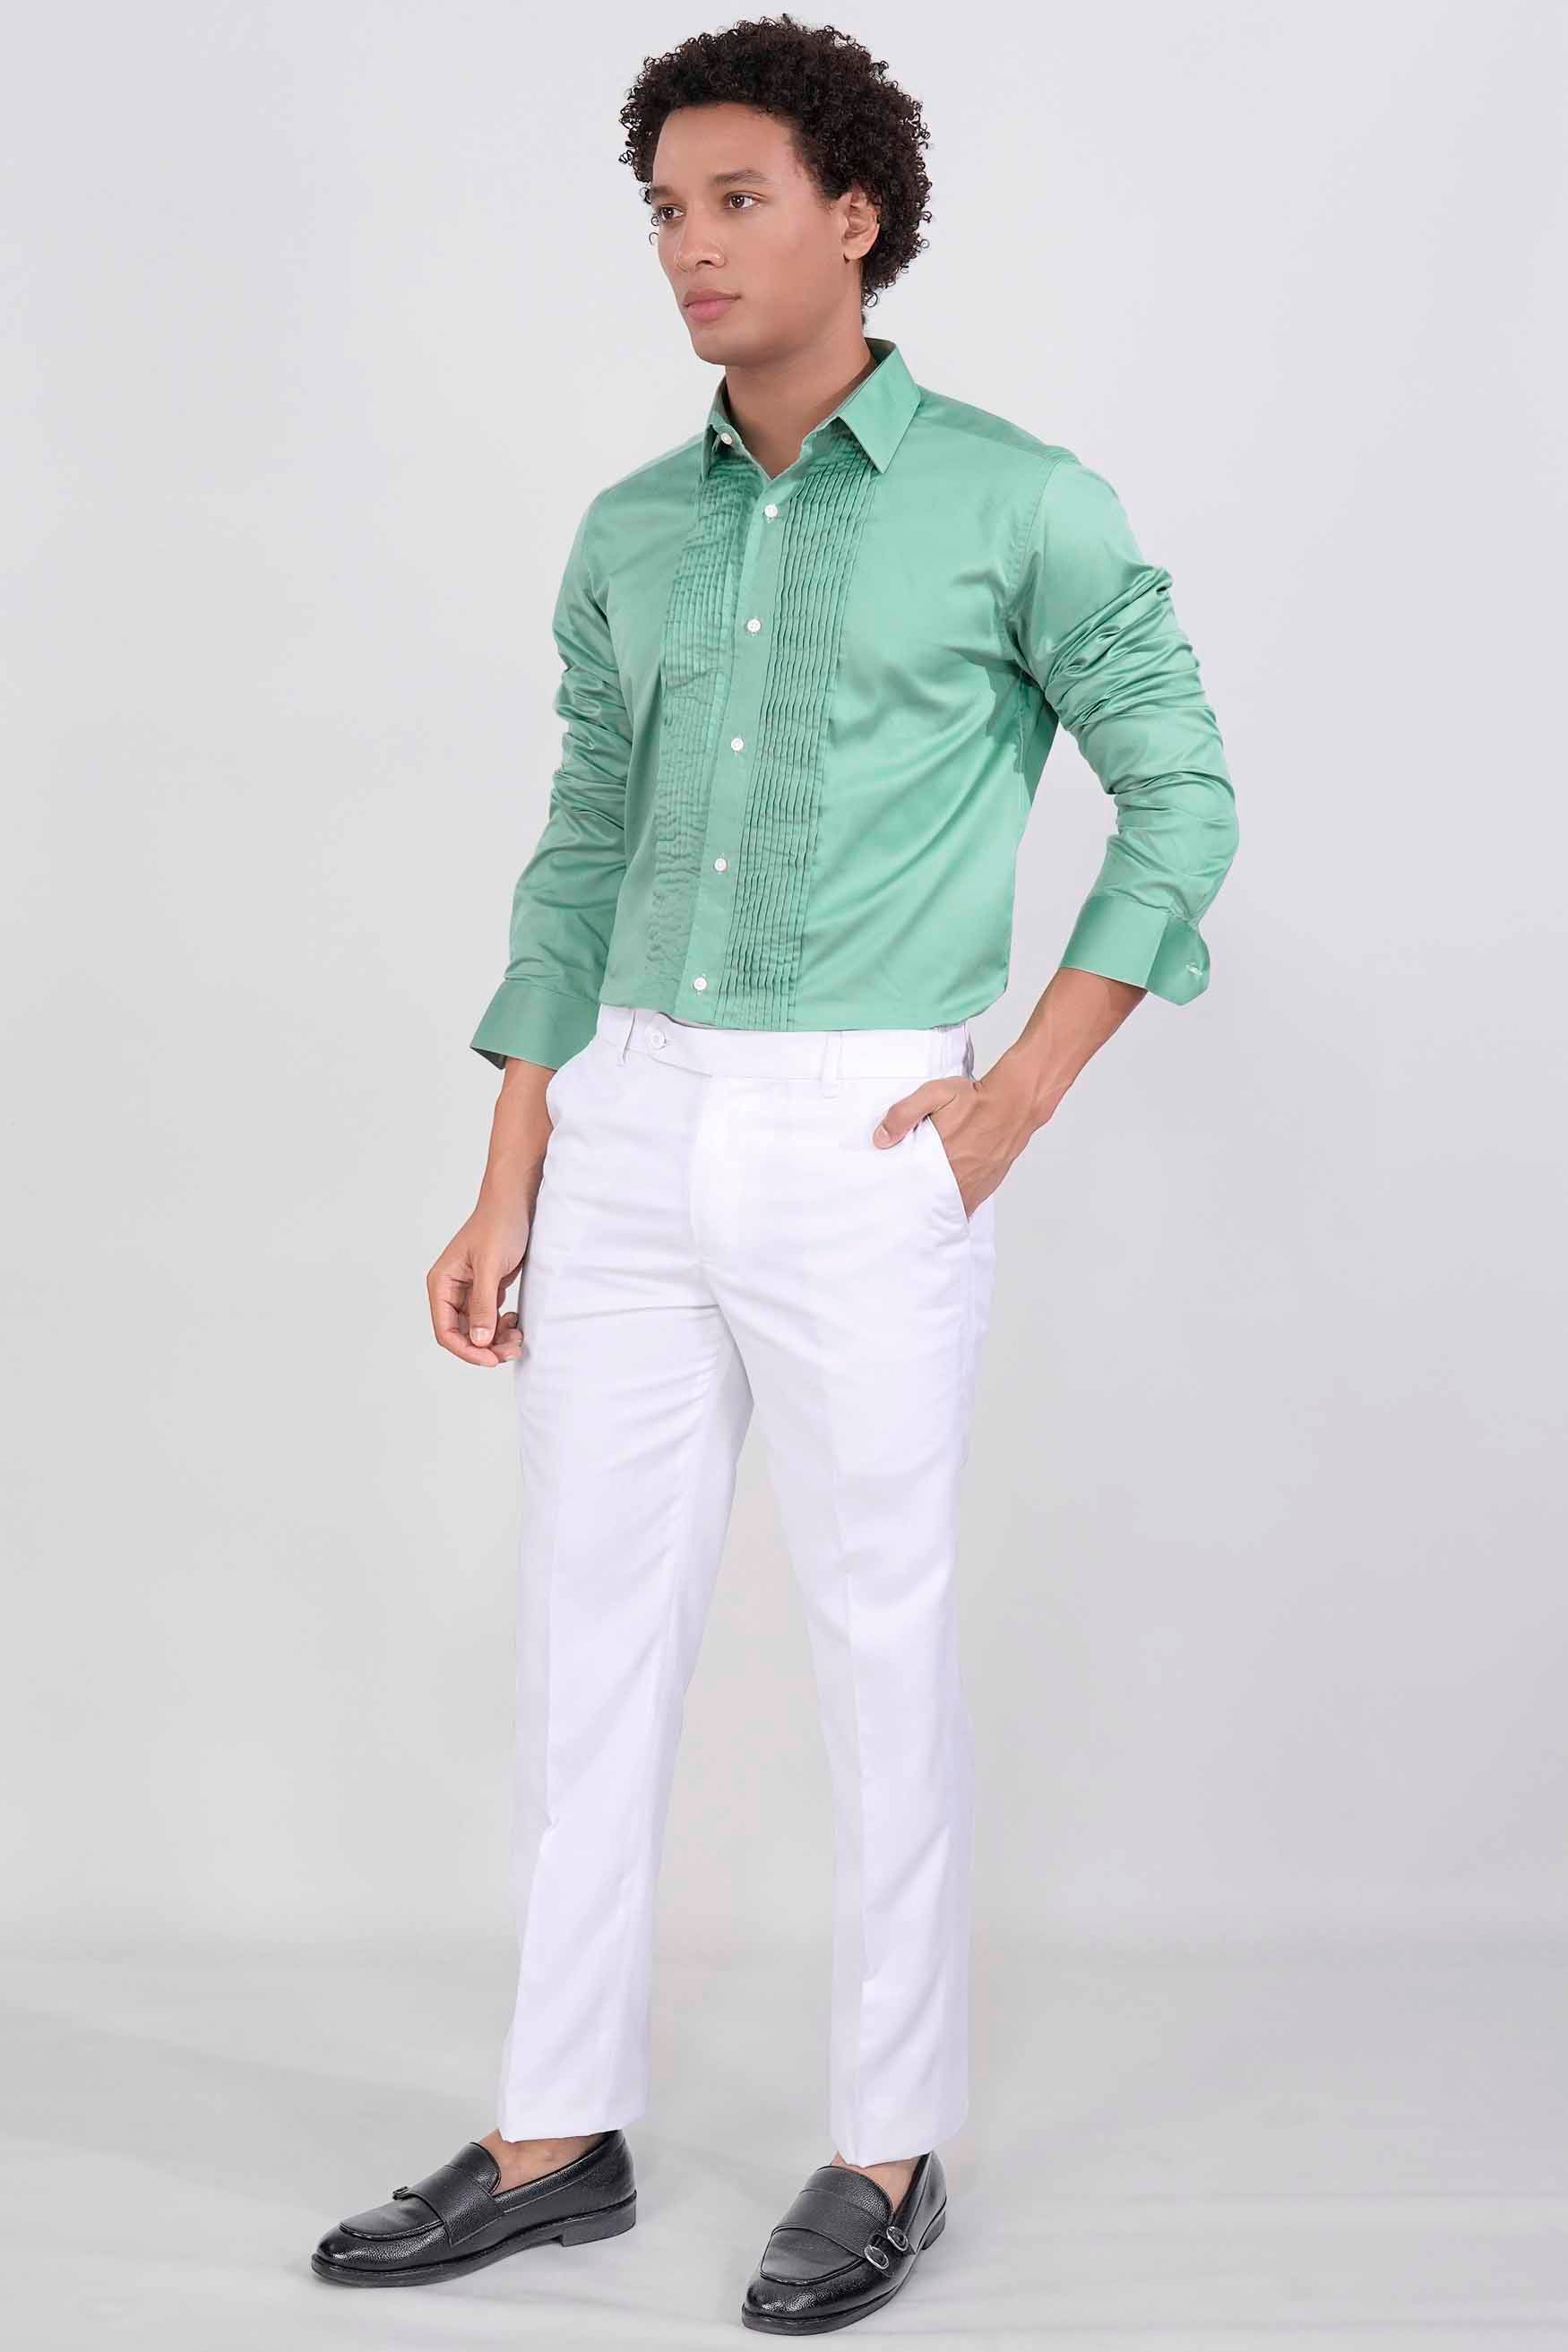 Gulf Stream Green Subtle Sheen Super Soft Premium Cotton Tuxedo Shirt